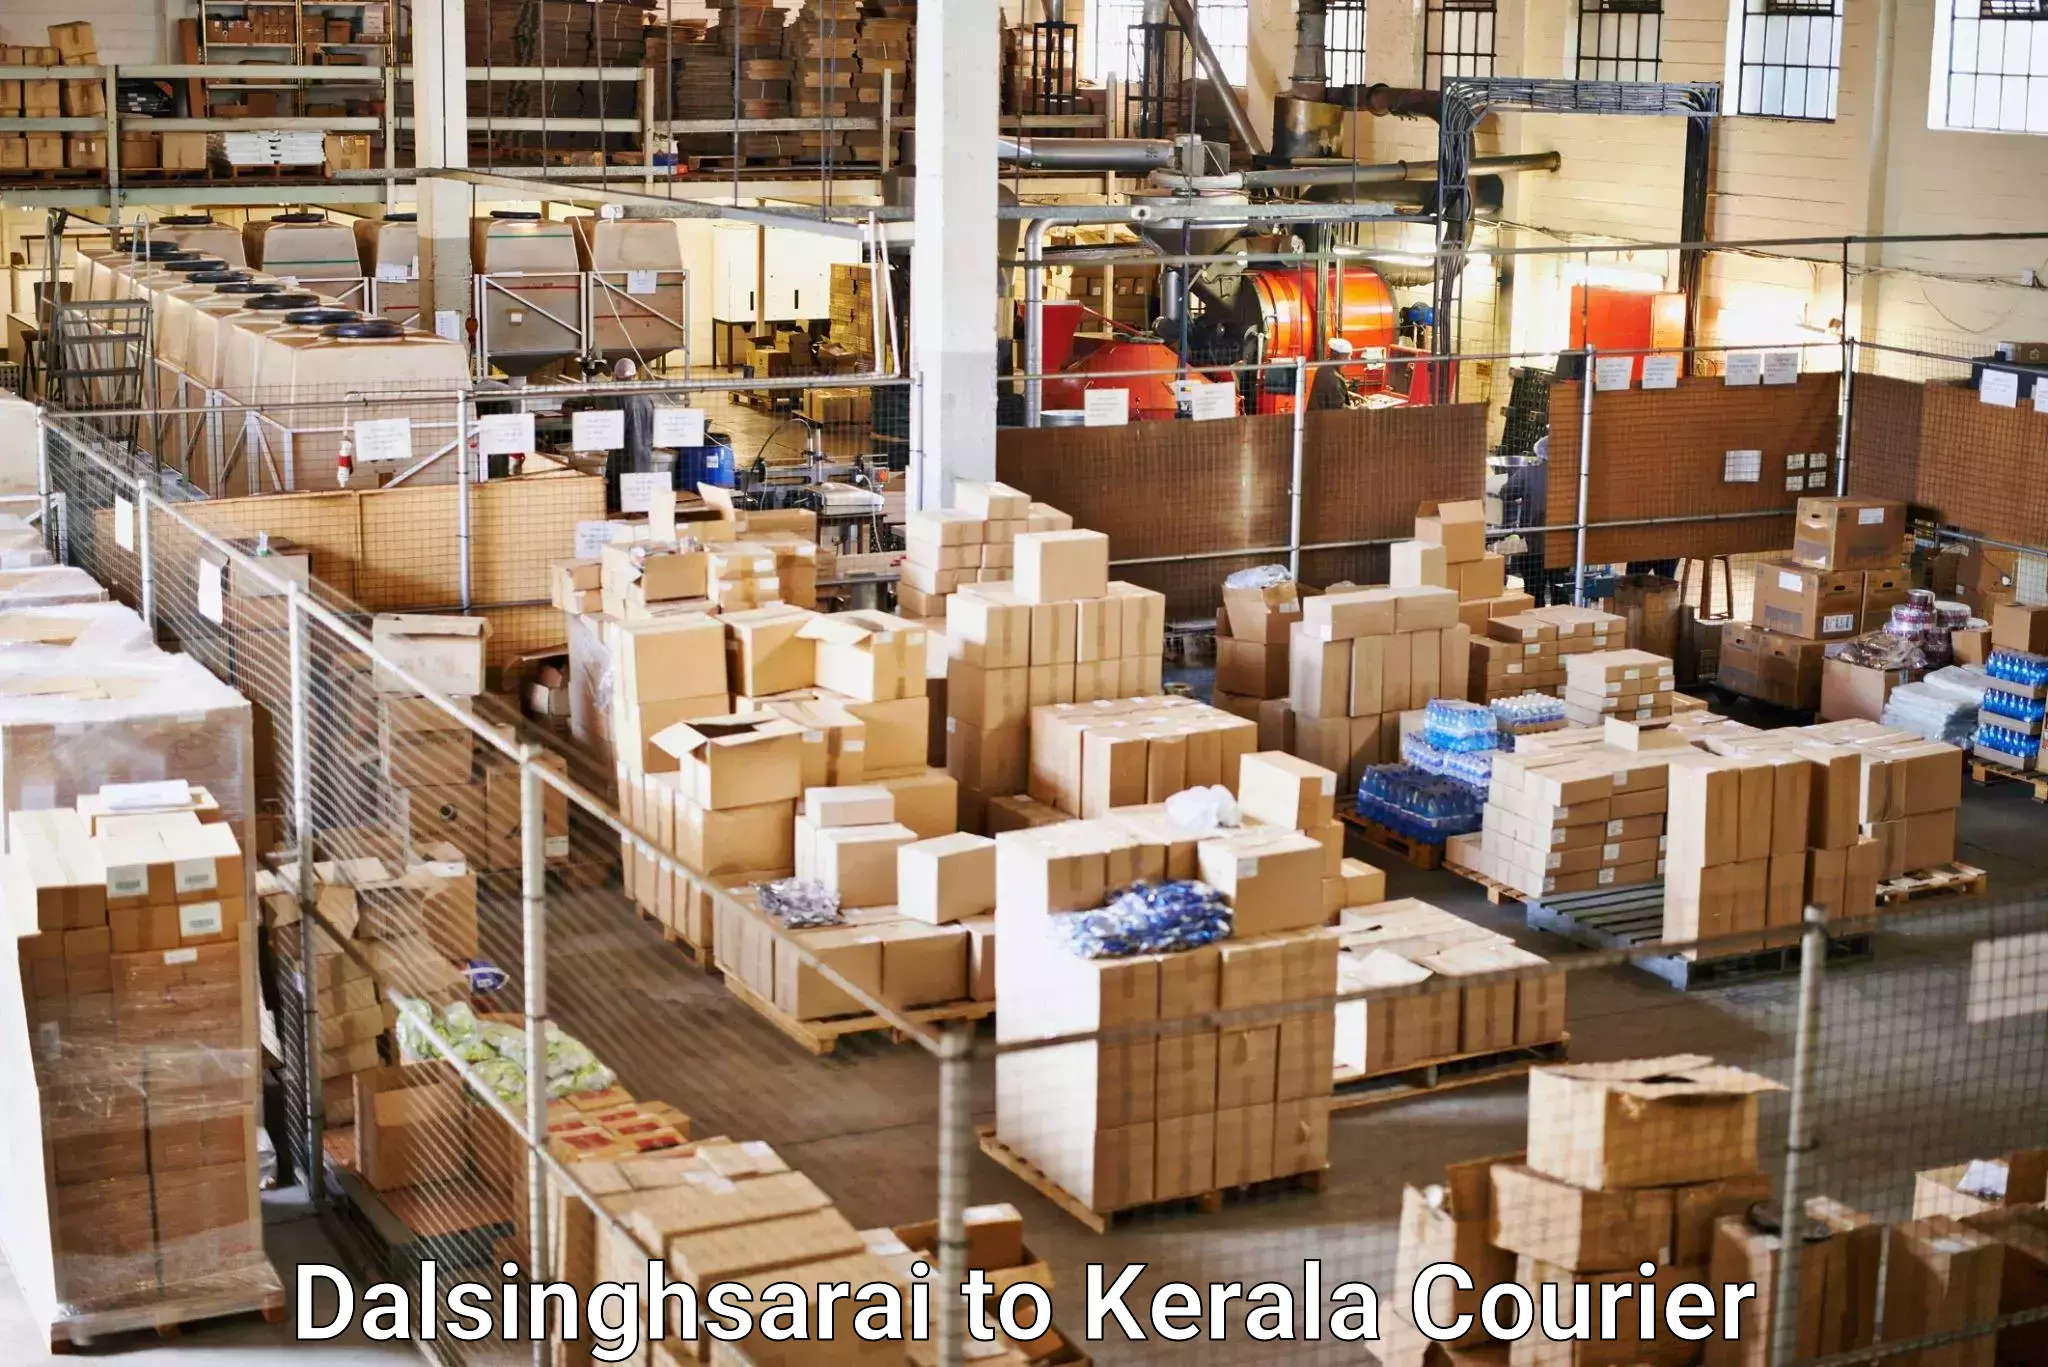 Advanced shipping technology Dalsinghsarai to Cochin Port Kochi